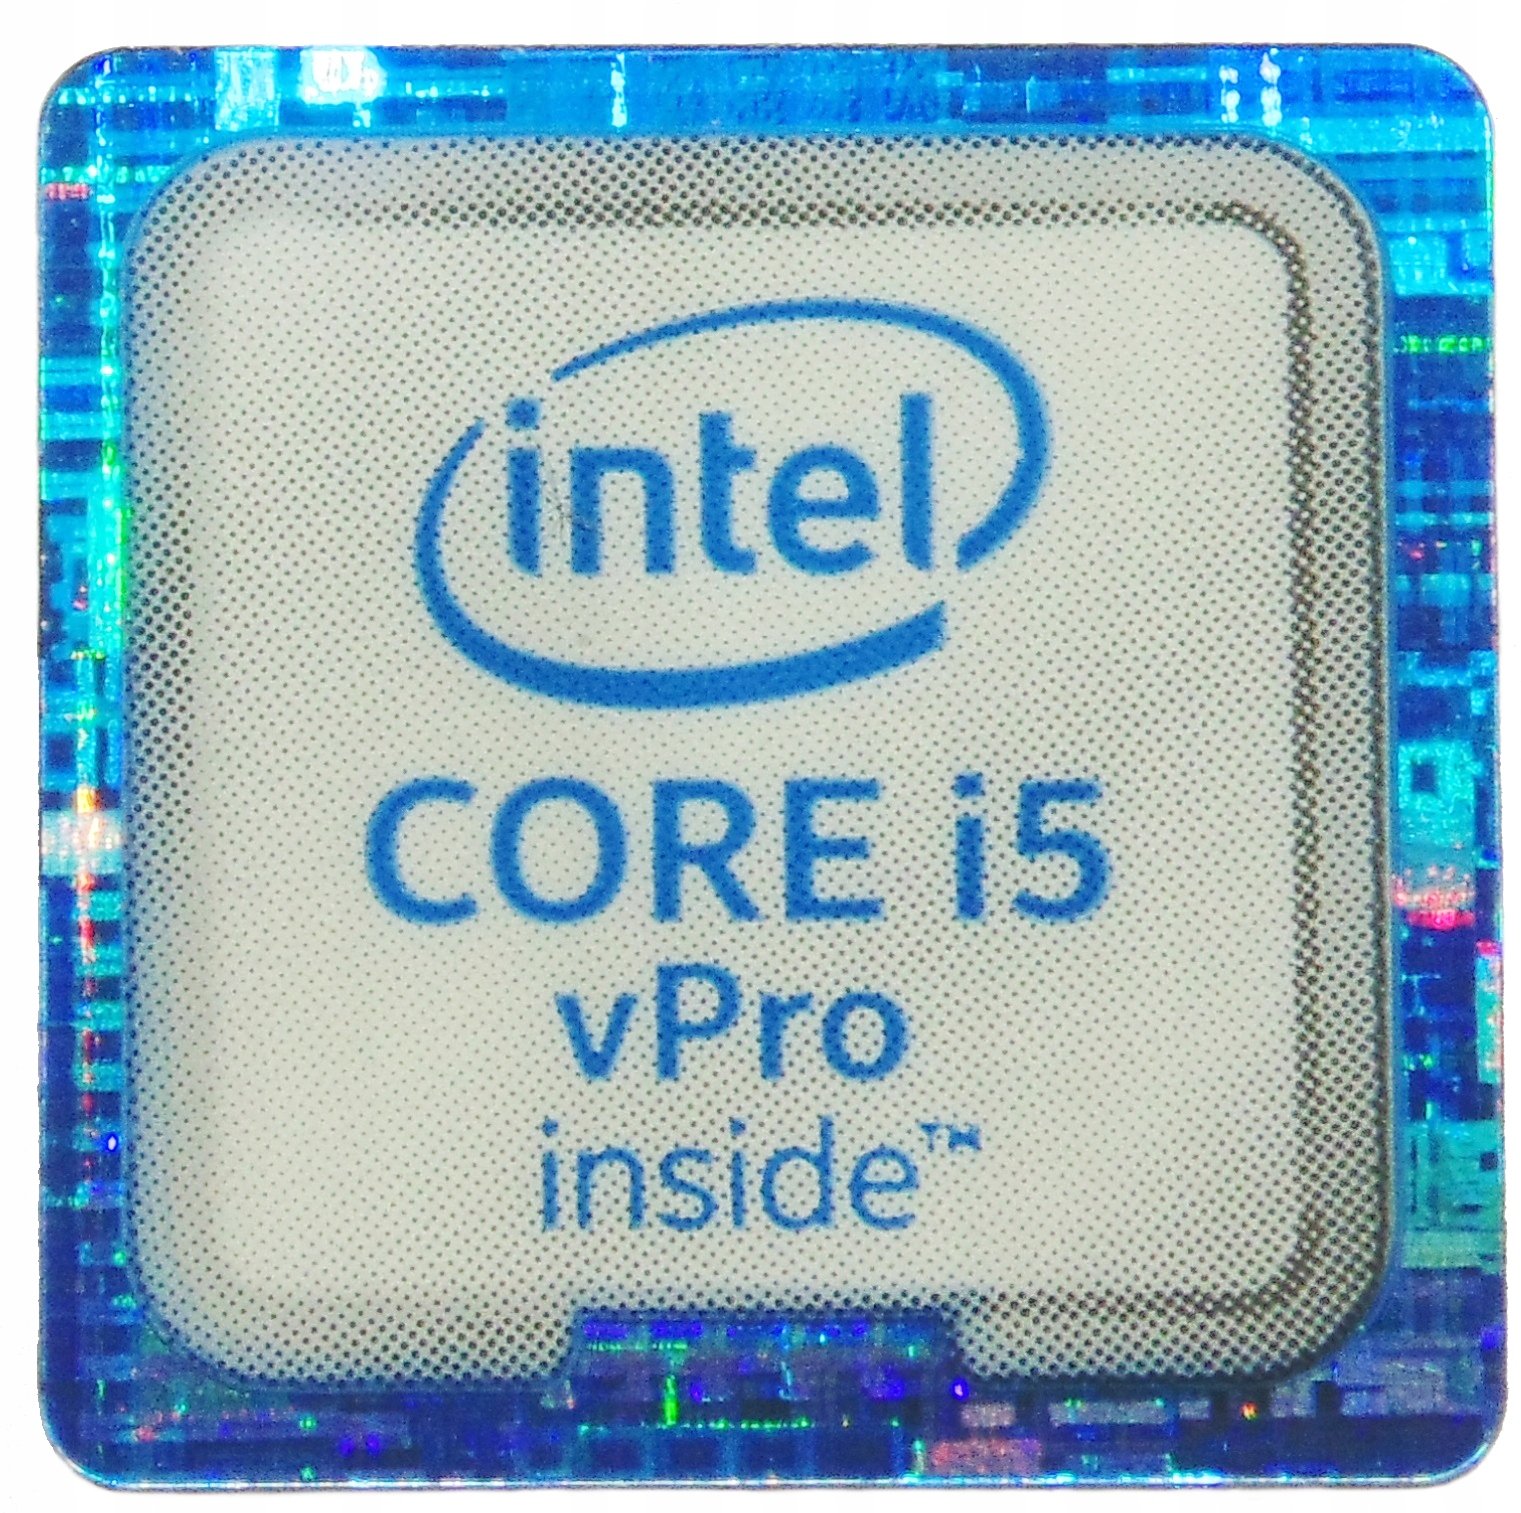 Купить интел i3. Intel Core i5 vpro. Процессор Intel inside Core i5 vpro. Core i5 vpro inside. Intel Core i5 inside наклейка.